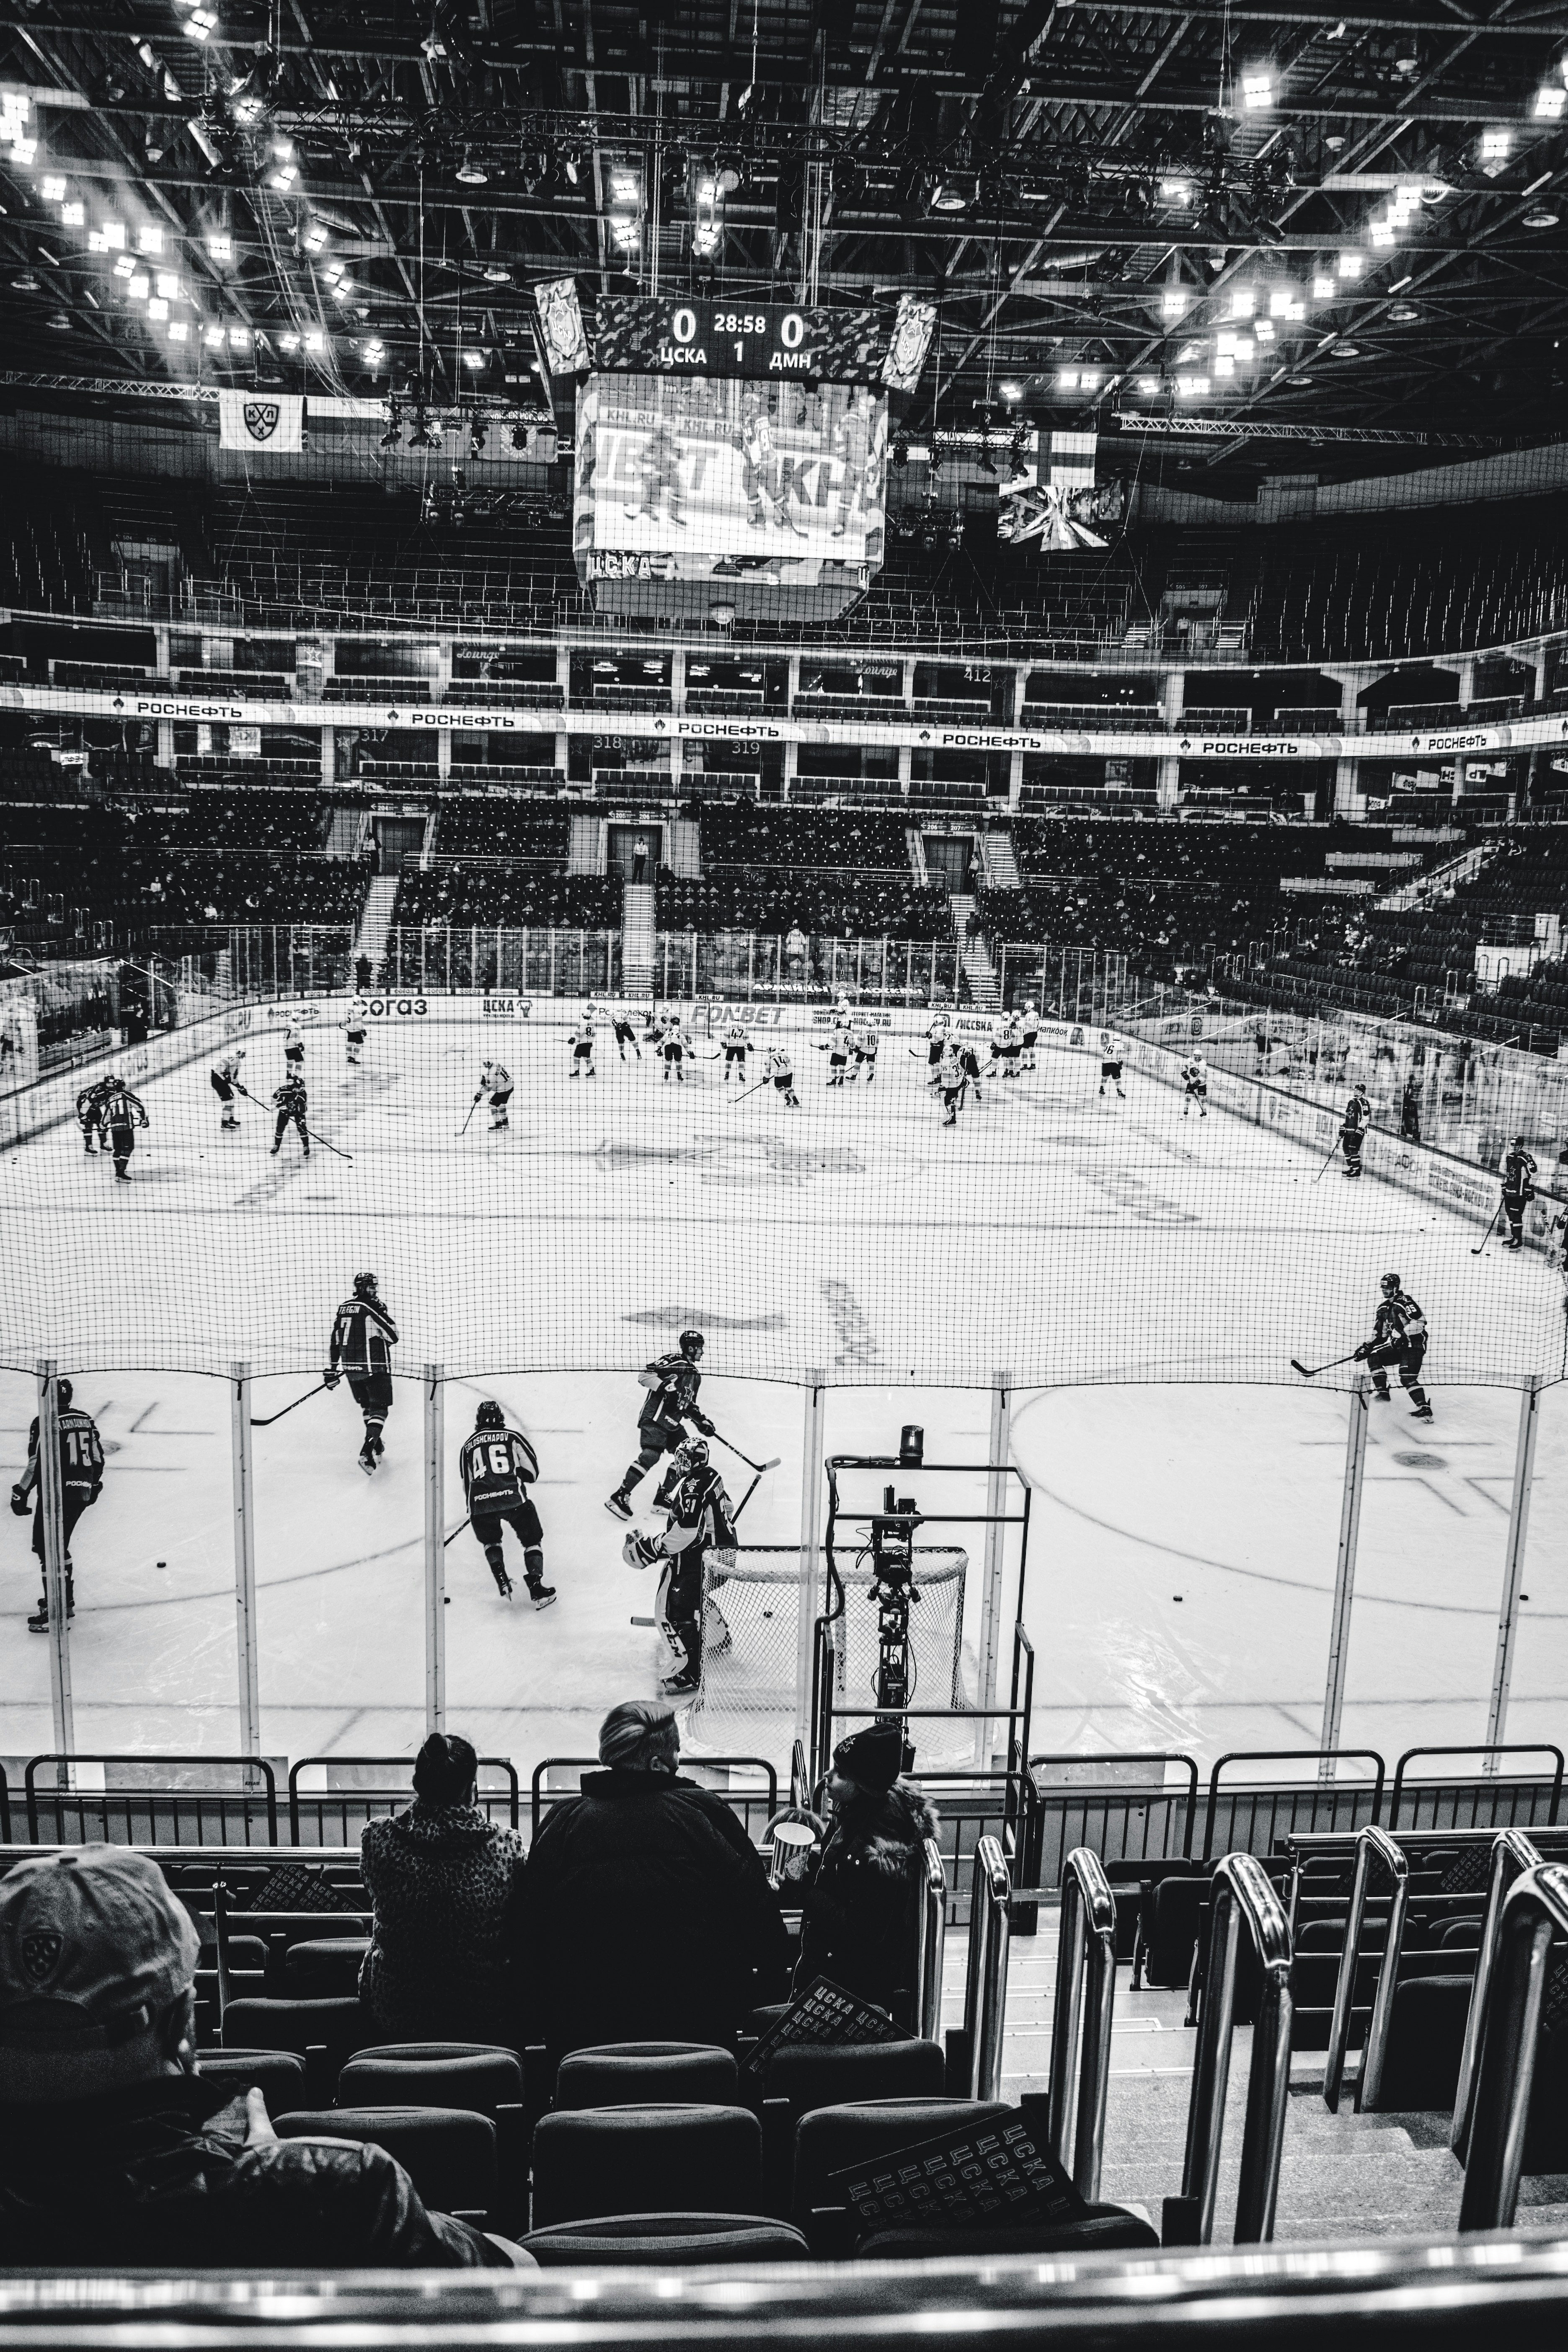 grayscale photo of people playing ice hockey